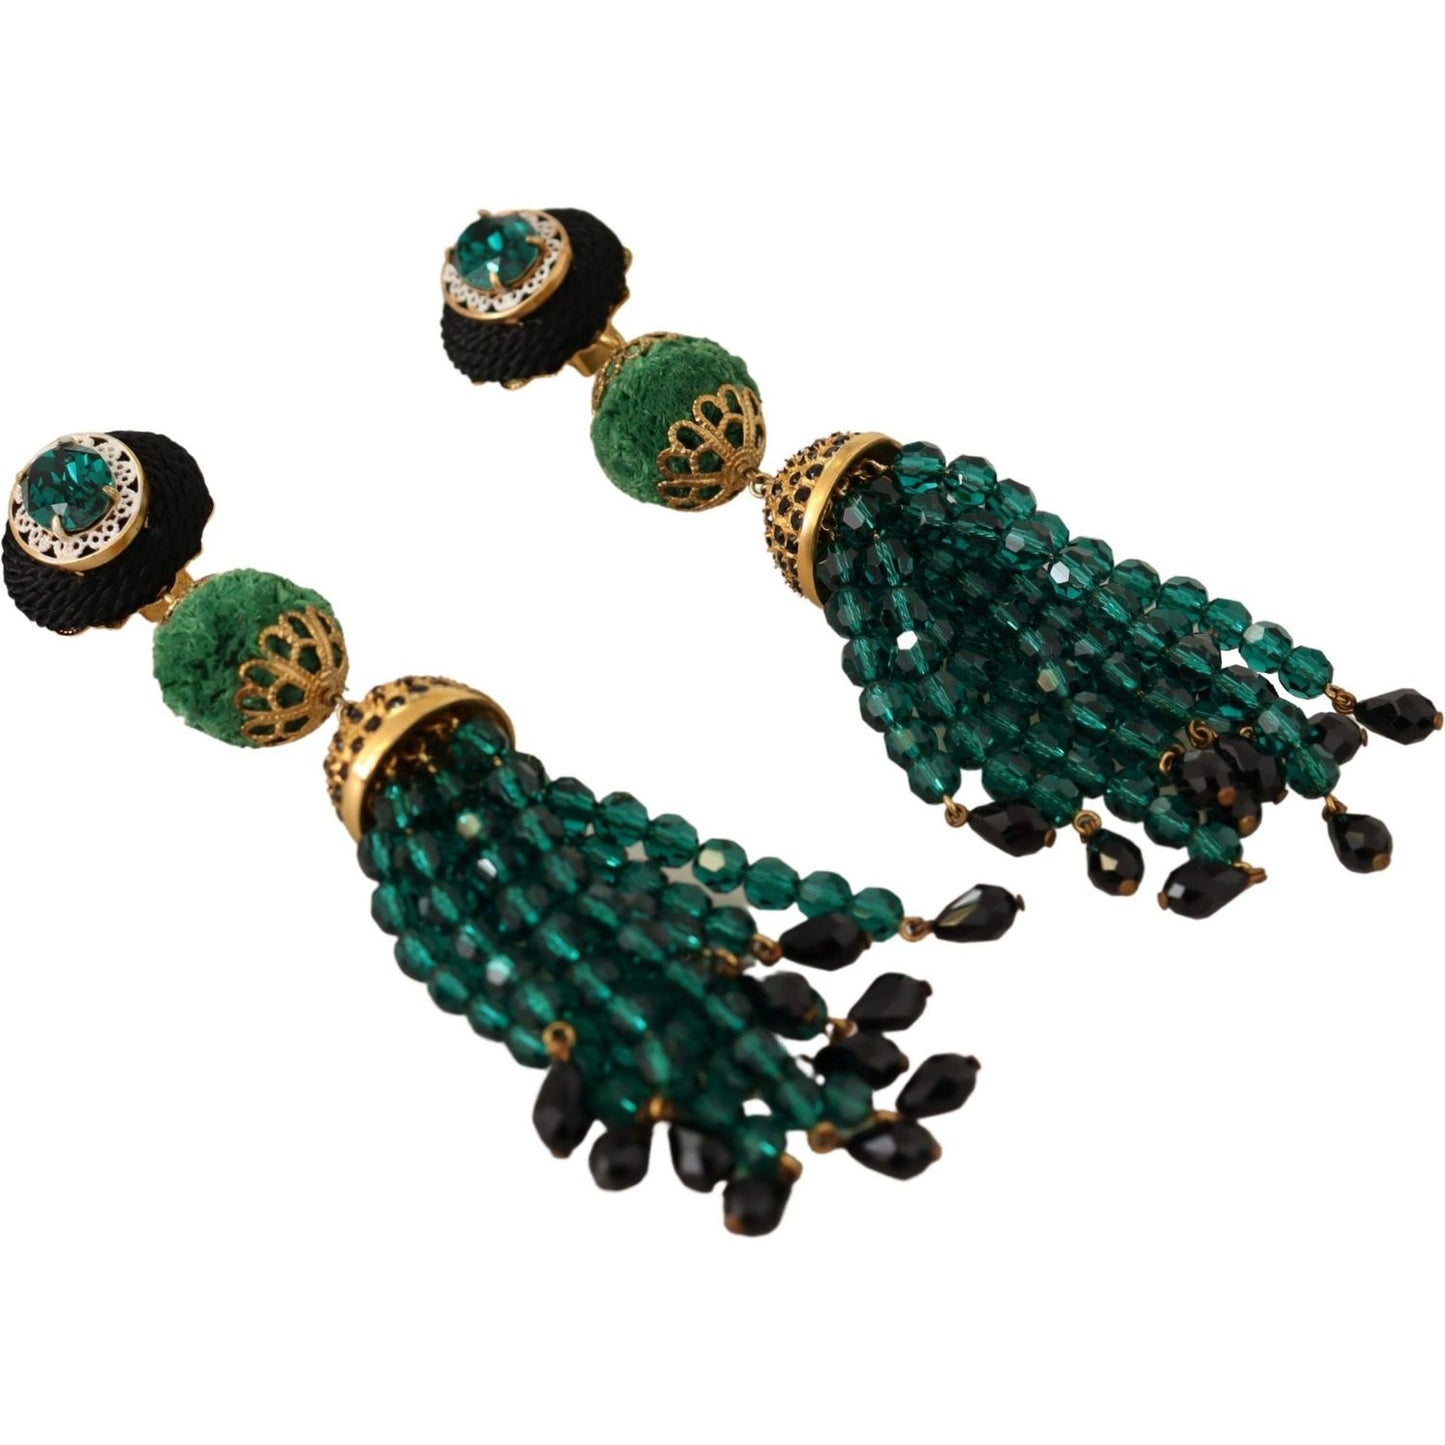 Dolce & Gabbana Elegant Crystal Drop Clip-On Earrings green-crystals-gold-tone-drop-clip-on-dangle-earrings IMG_7623-1-scaled-d9fd7540-53c.jpg